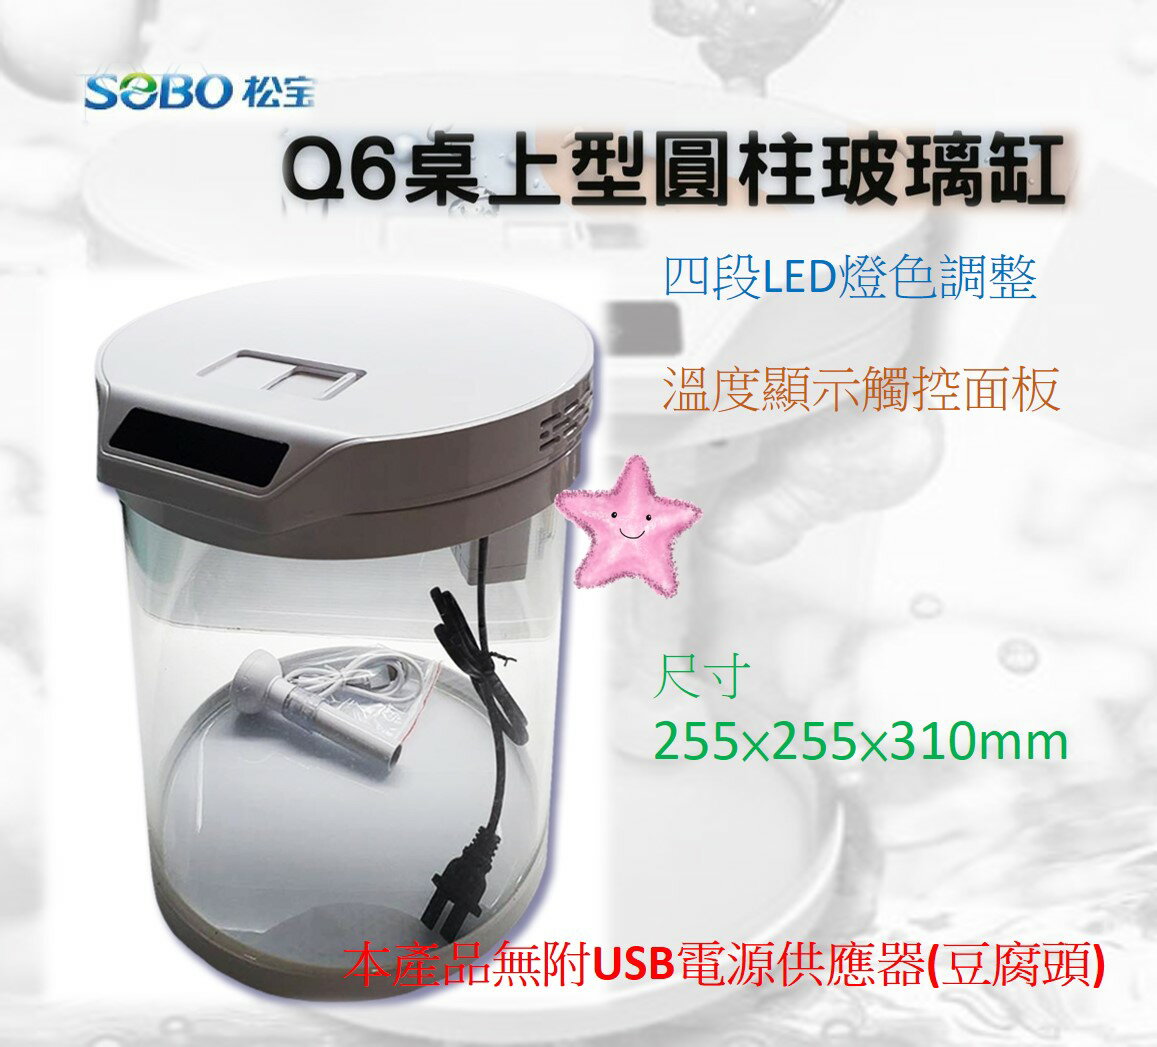 SOBO 松寶 Q6 USB 桌上型 圓柱玻璃缸(11L) 圓形魚缸 魚缸 套缸 星星水族